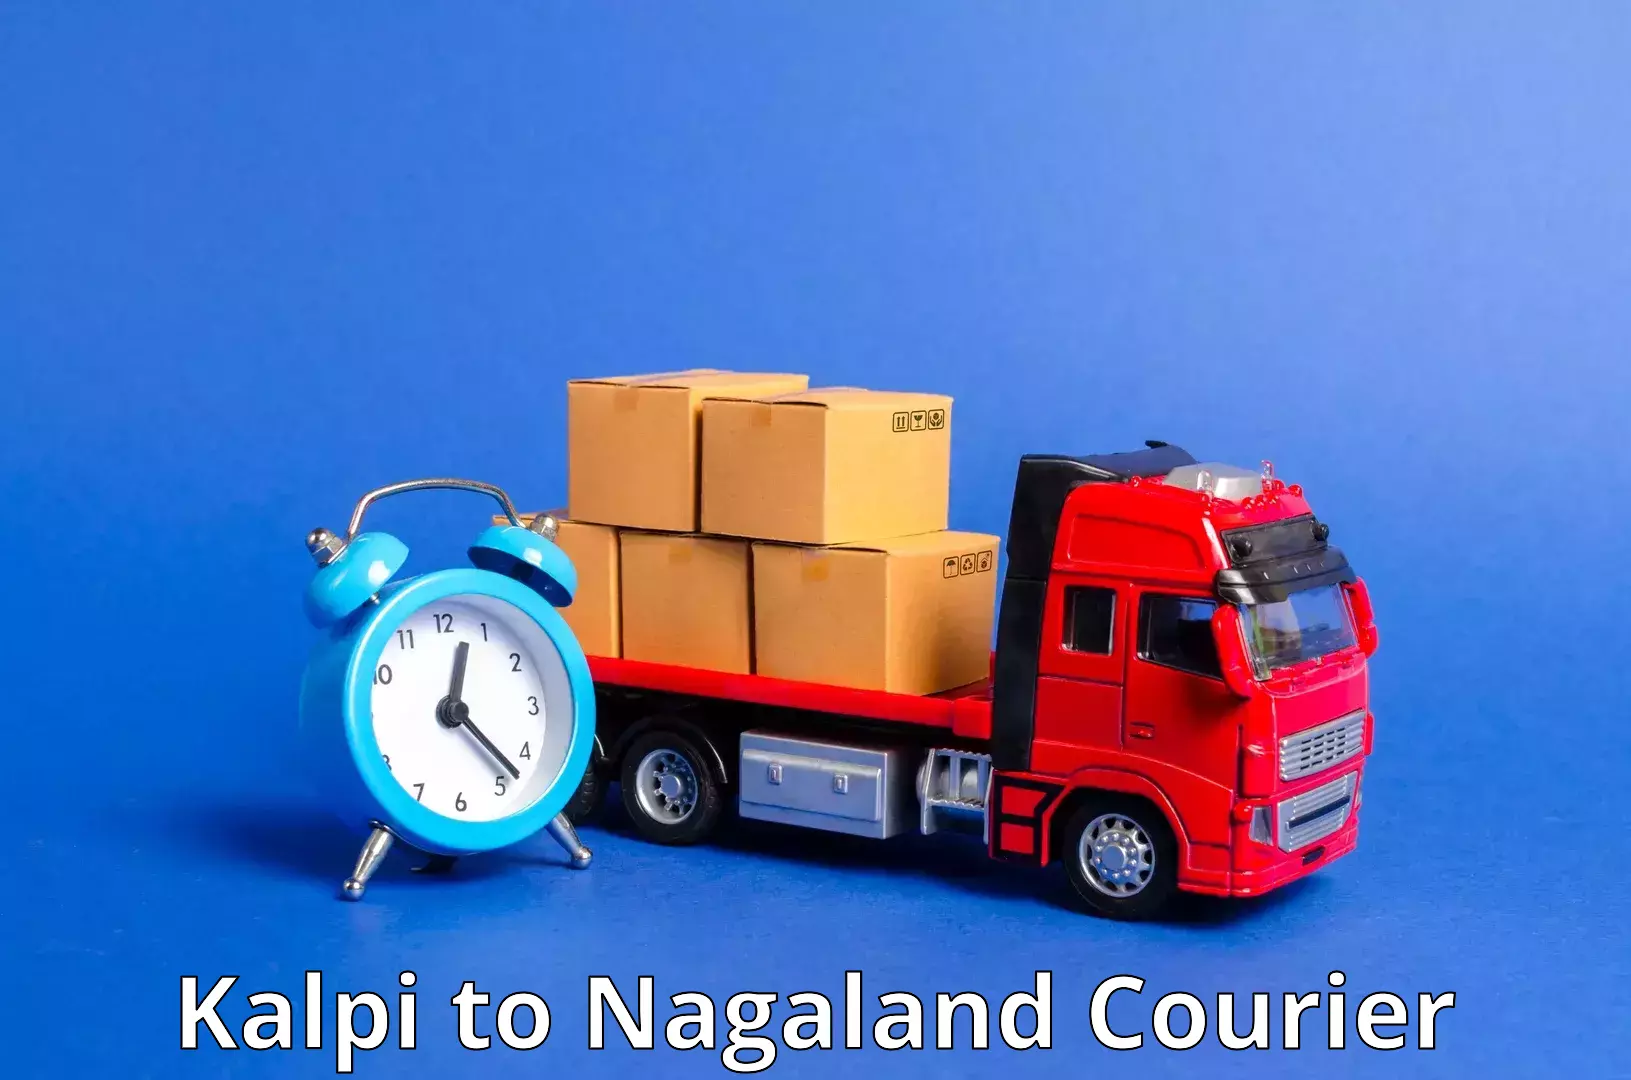 Nationwide courier service Kalpi to Dimapur